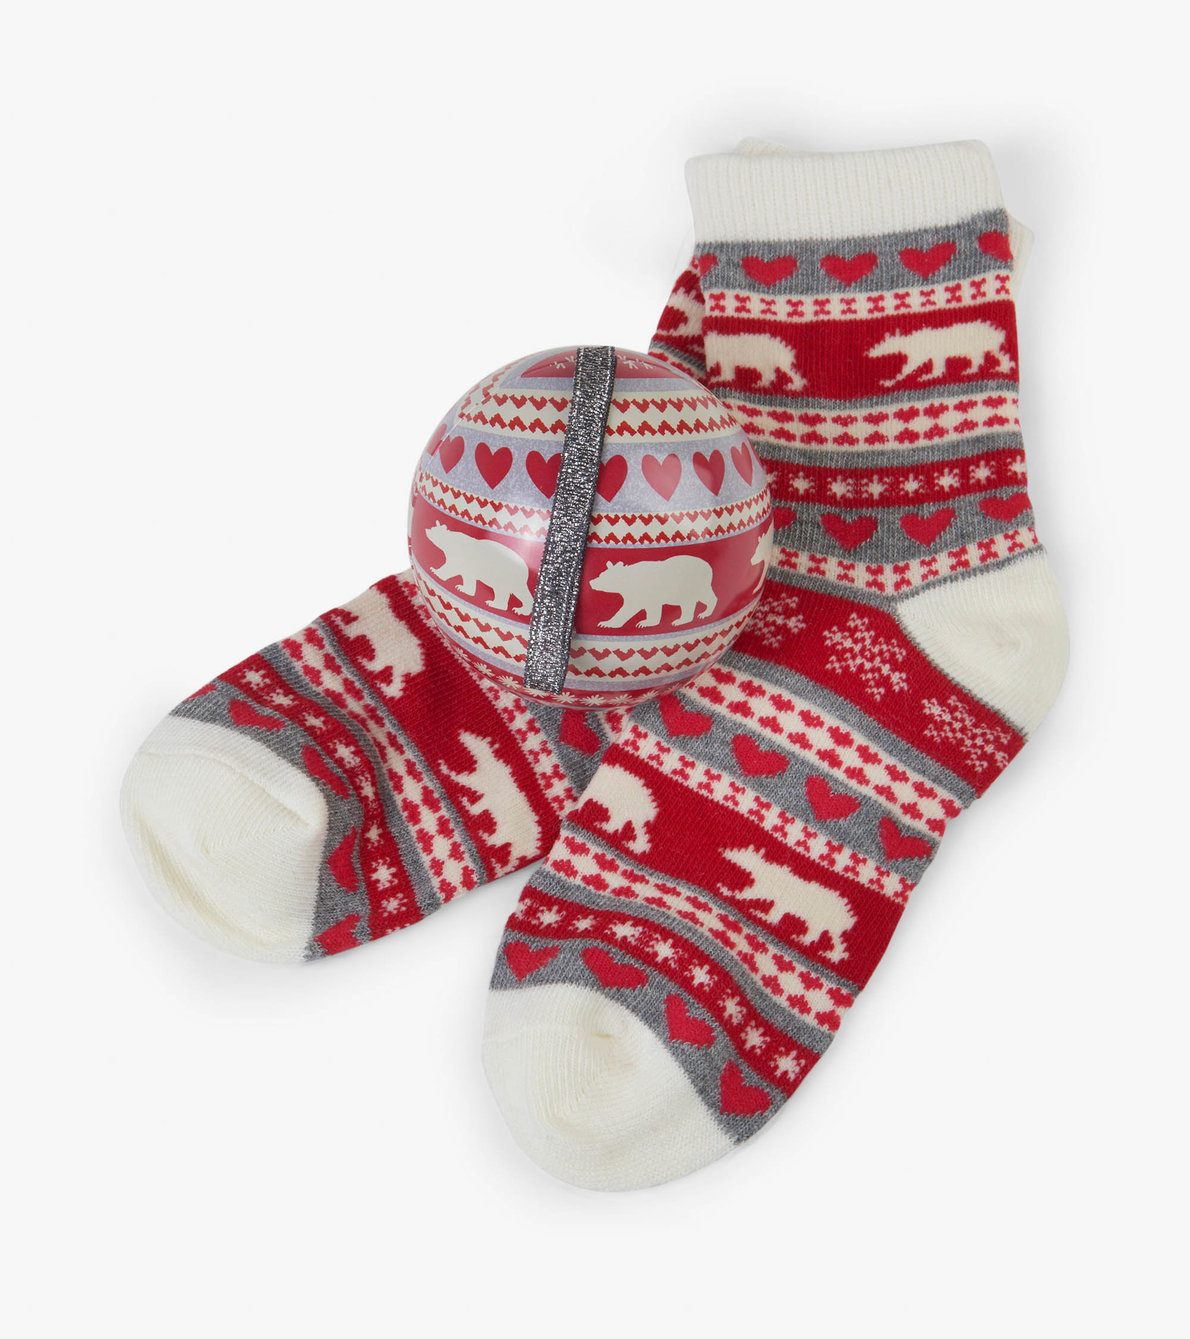 View larger image of Fair Isle Bear Kids Socks in Balls